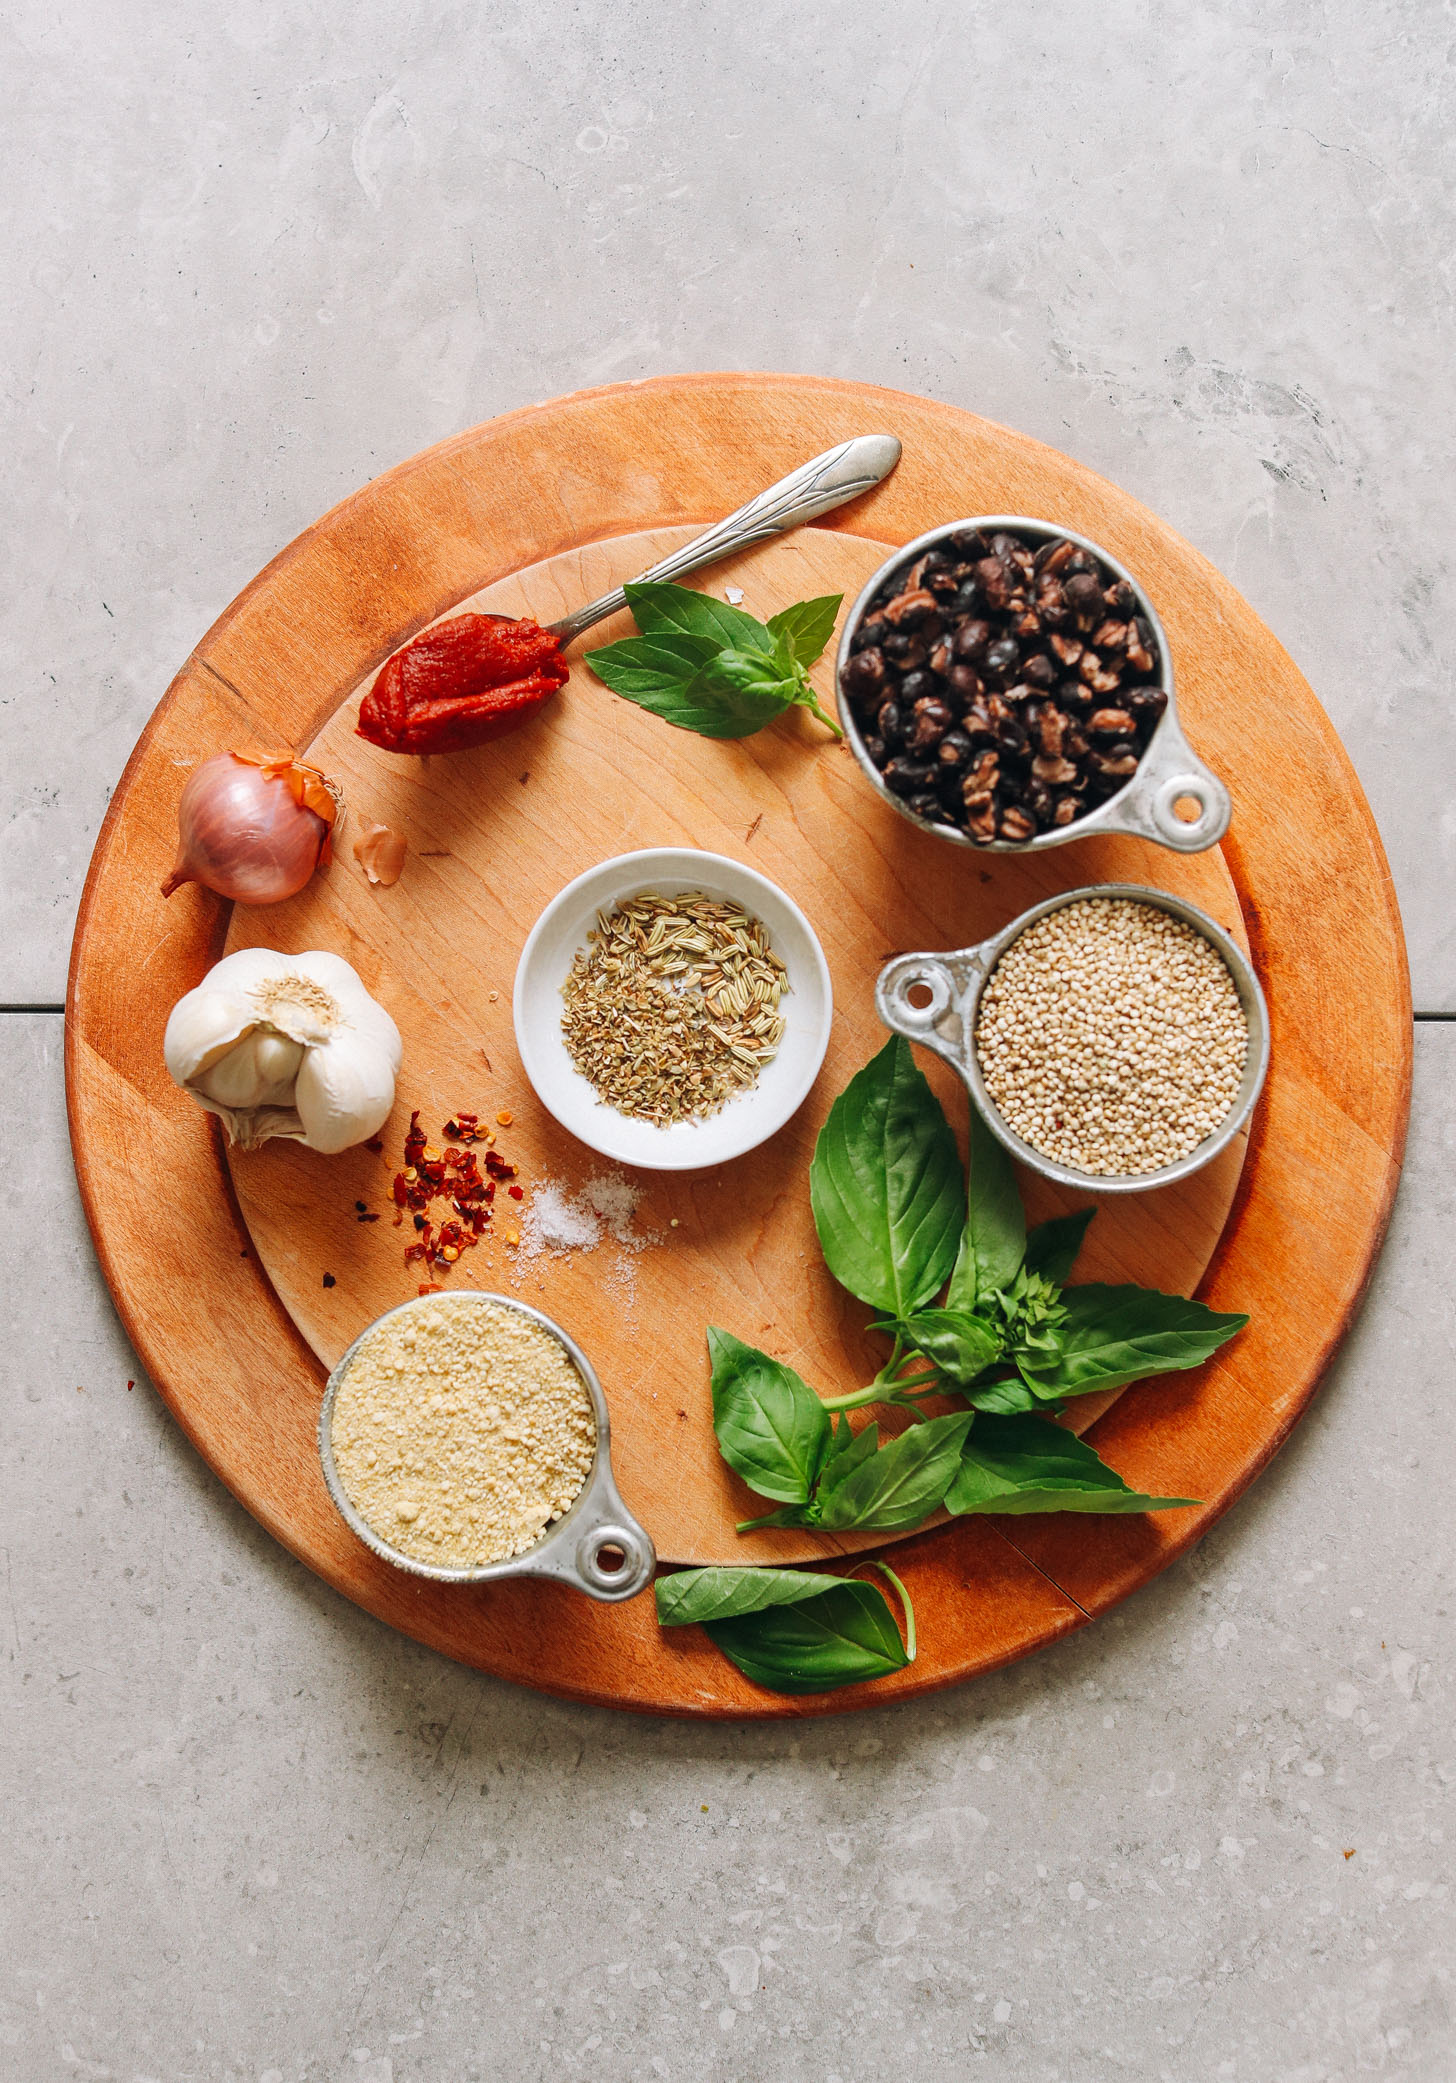 Ingredients for making quinoa black bean vegan meatballs